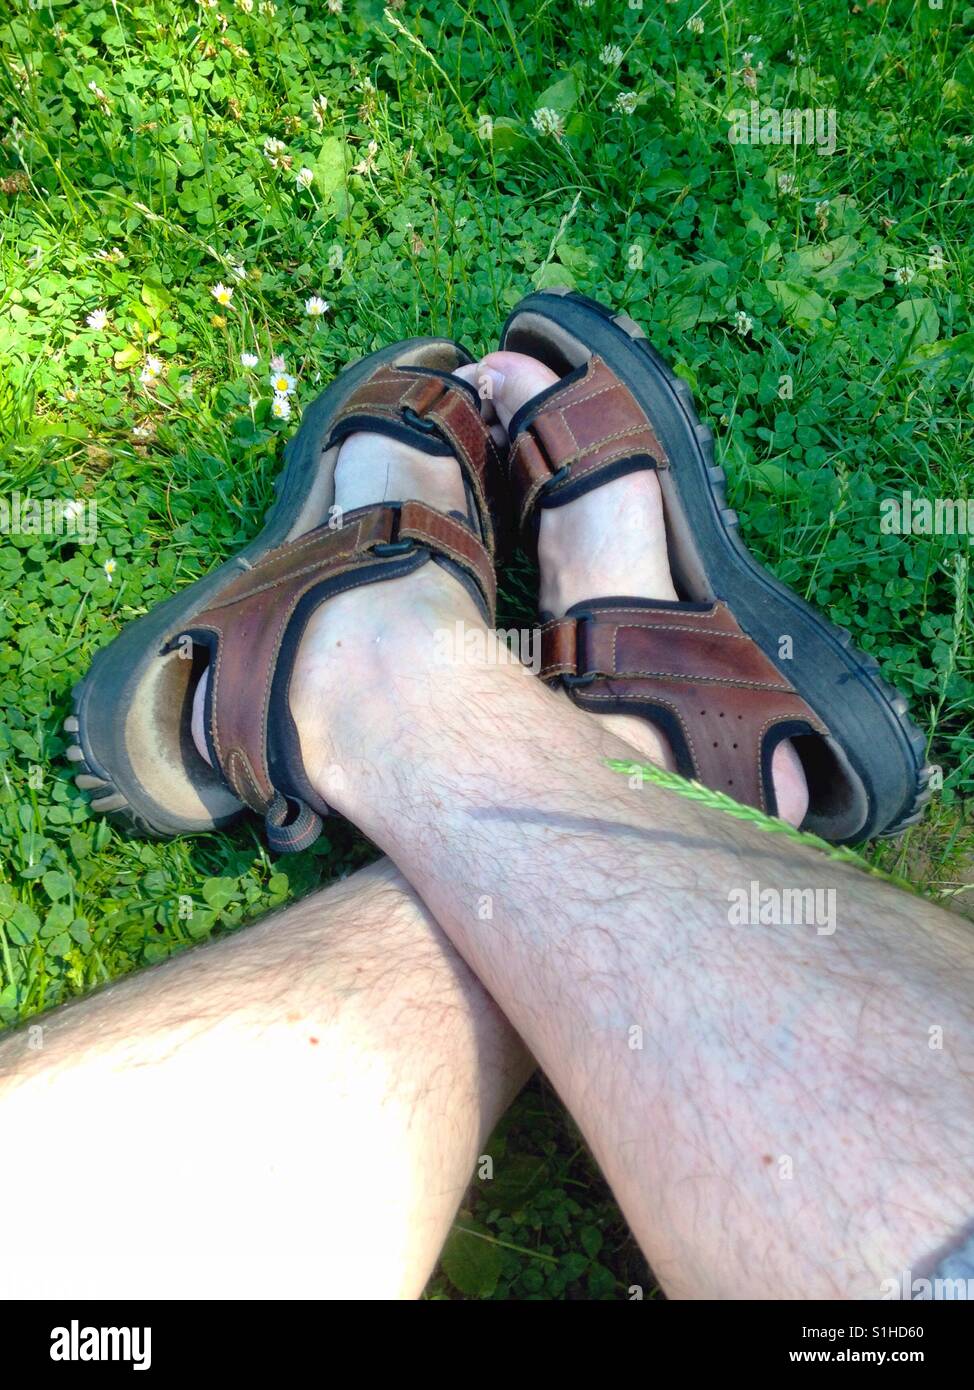 Male feet wearing sandals Stock Photo - Alamy